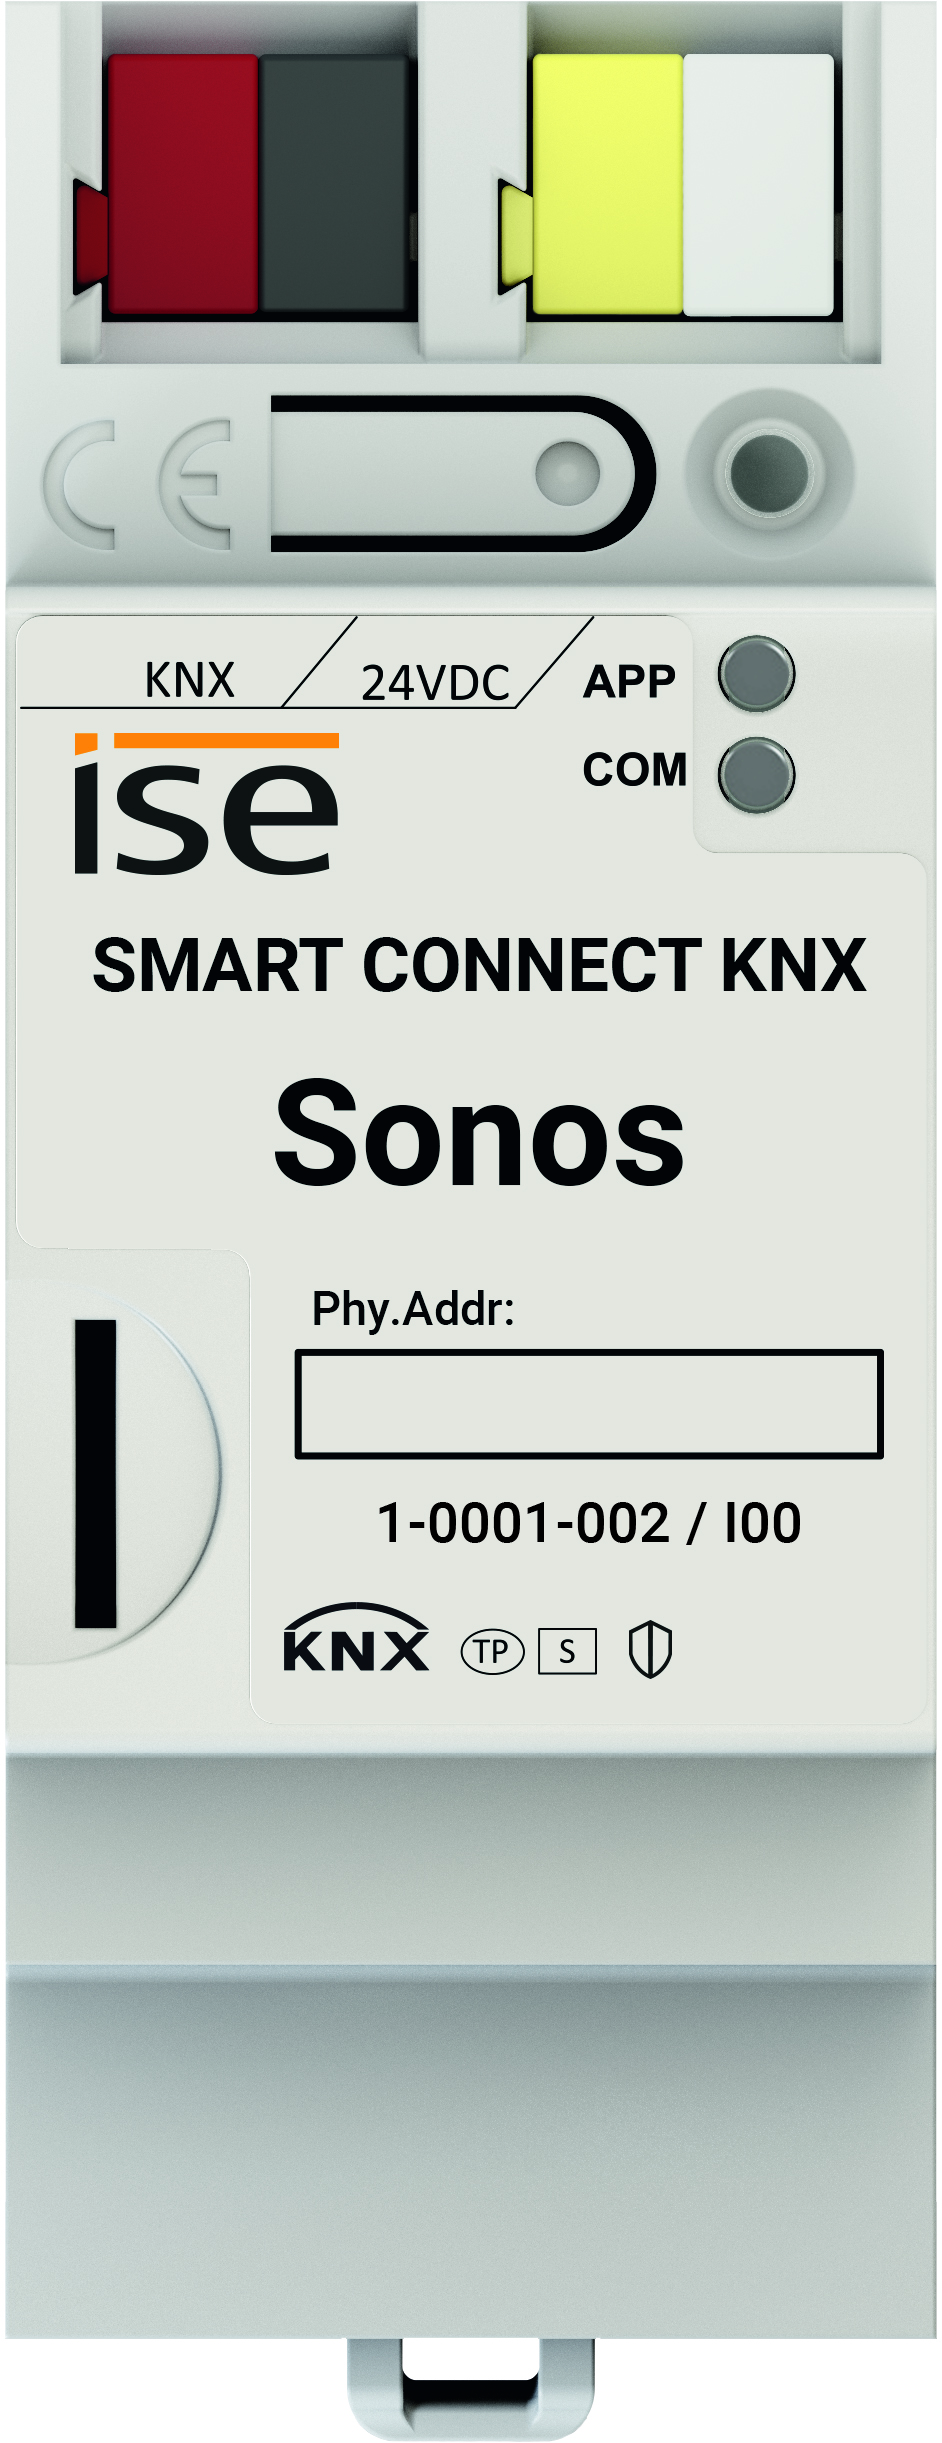 KNX SMART CONNECT Sonos